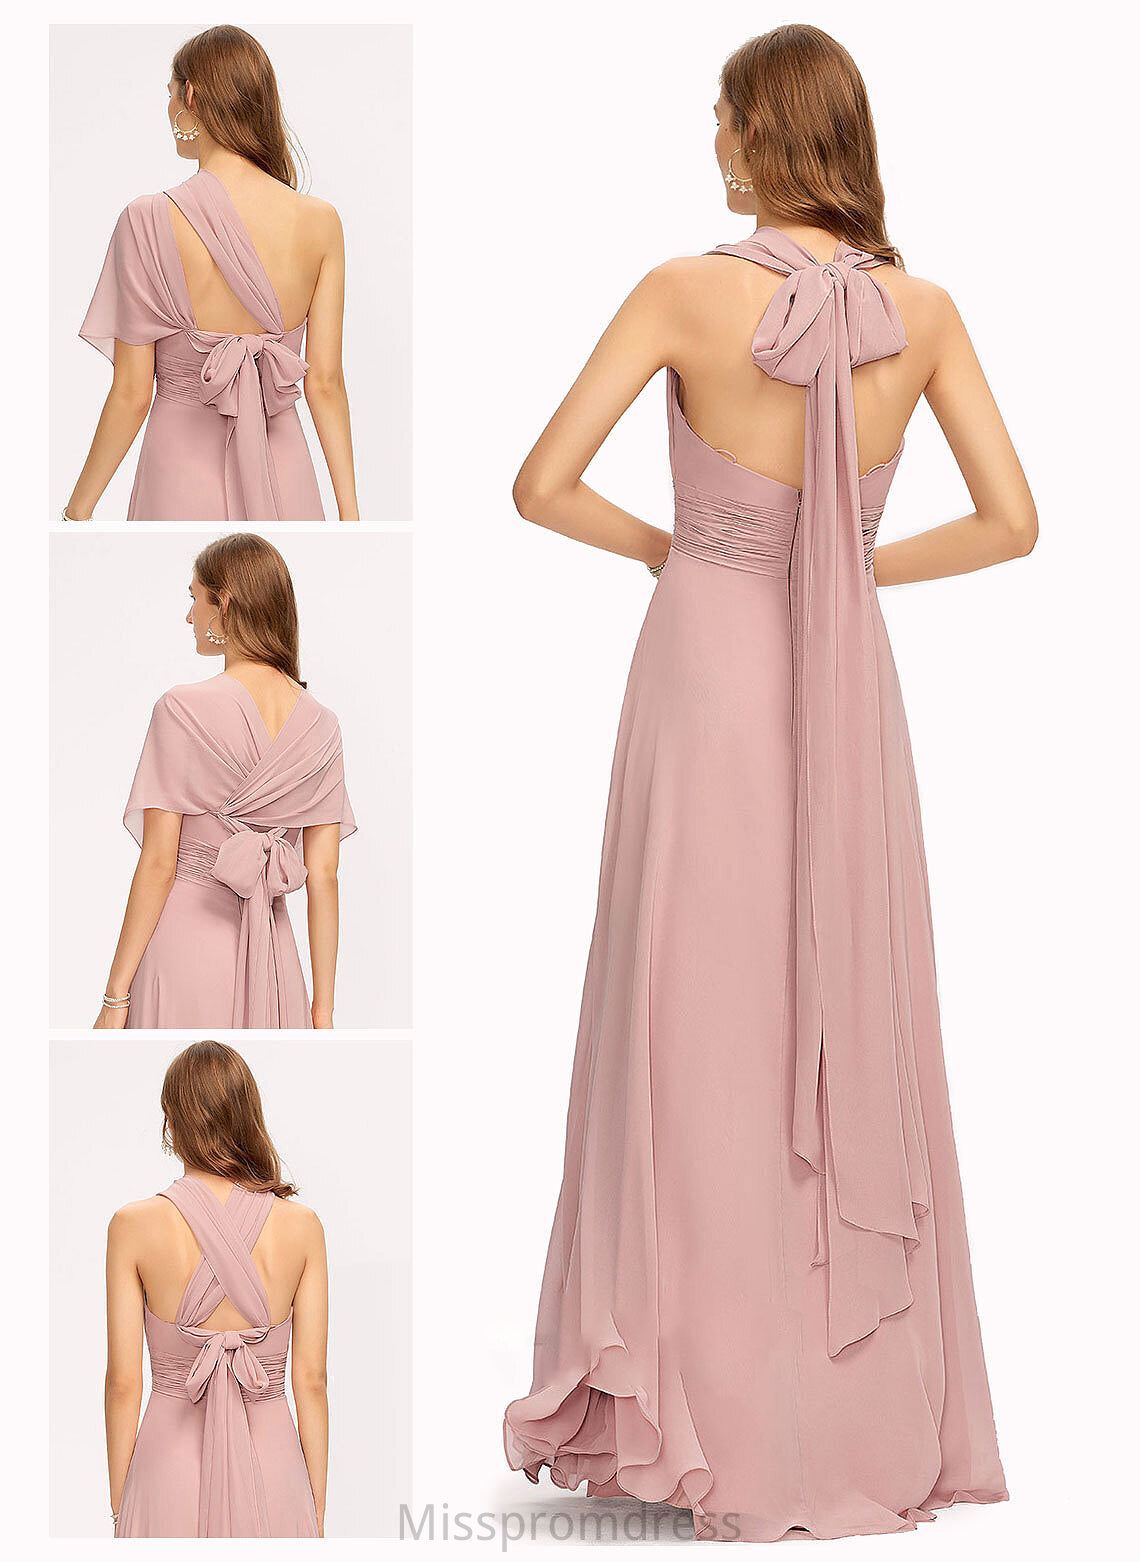 Embellishment Neckline V-neck Ruffle Silhouette A-Line Length One-Shoulder Halter Fabric Floor-Length Nadine Bridesmaid Dresses